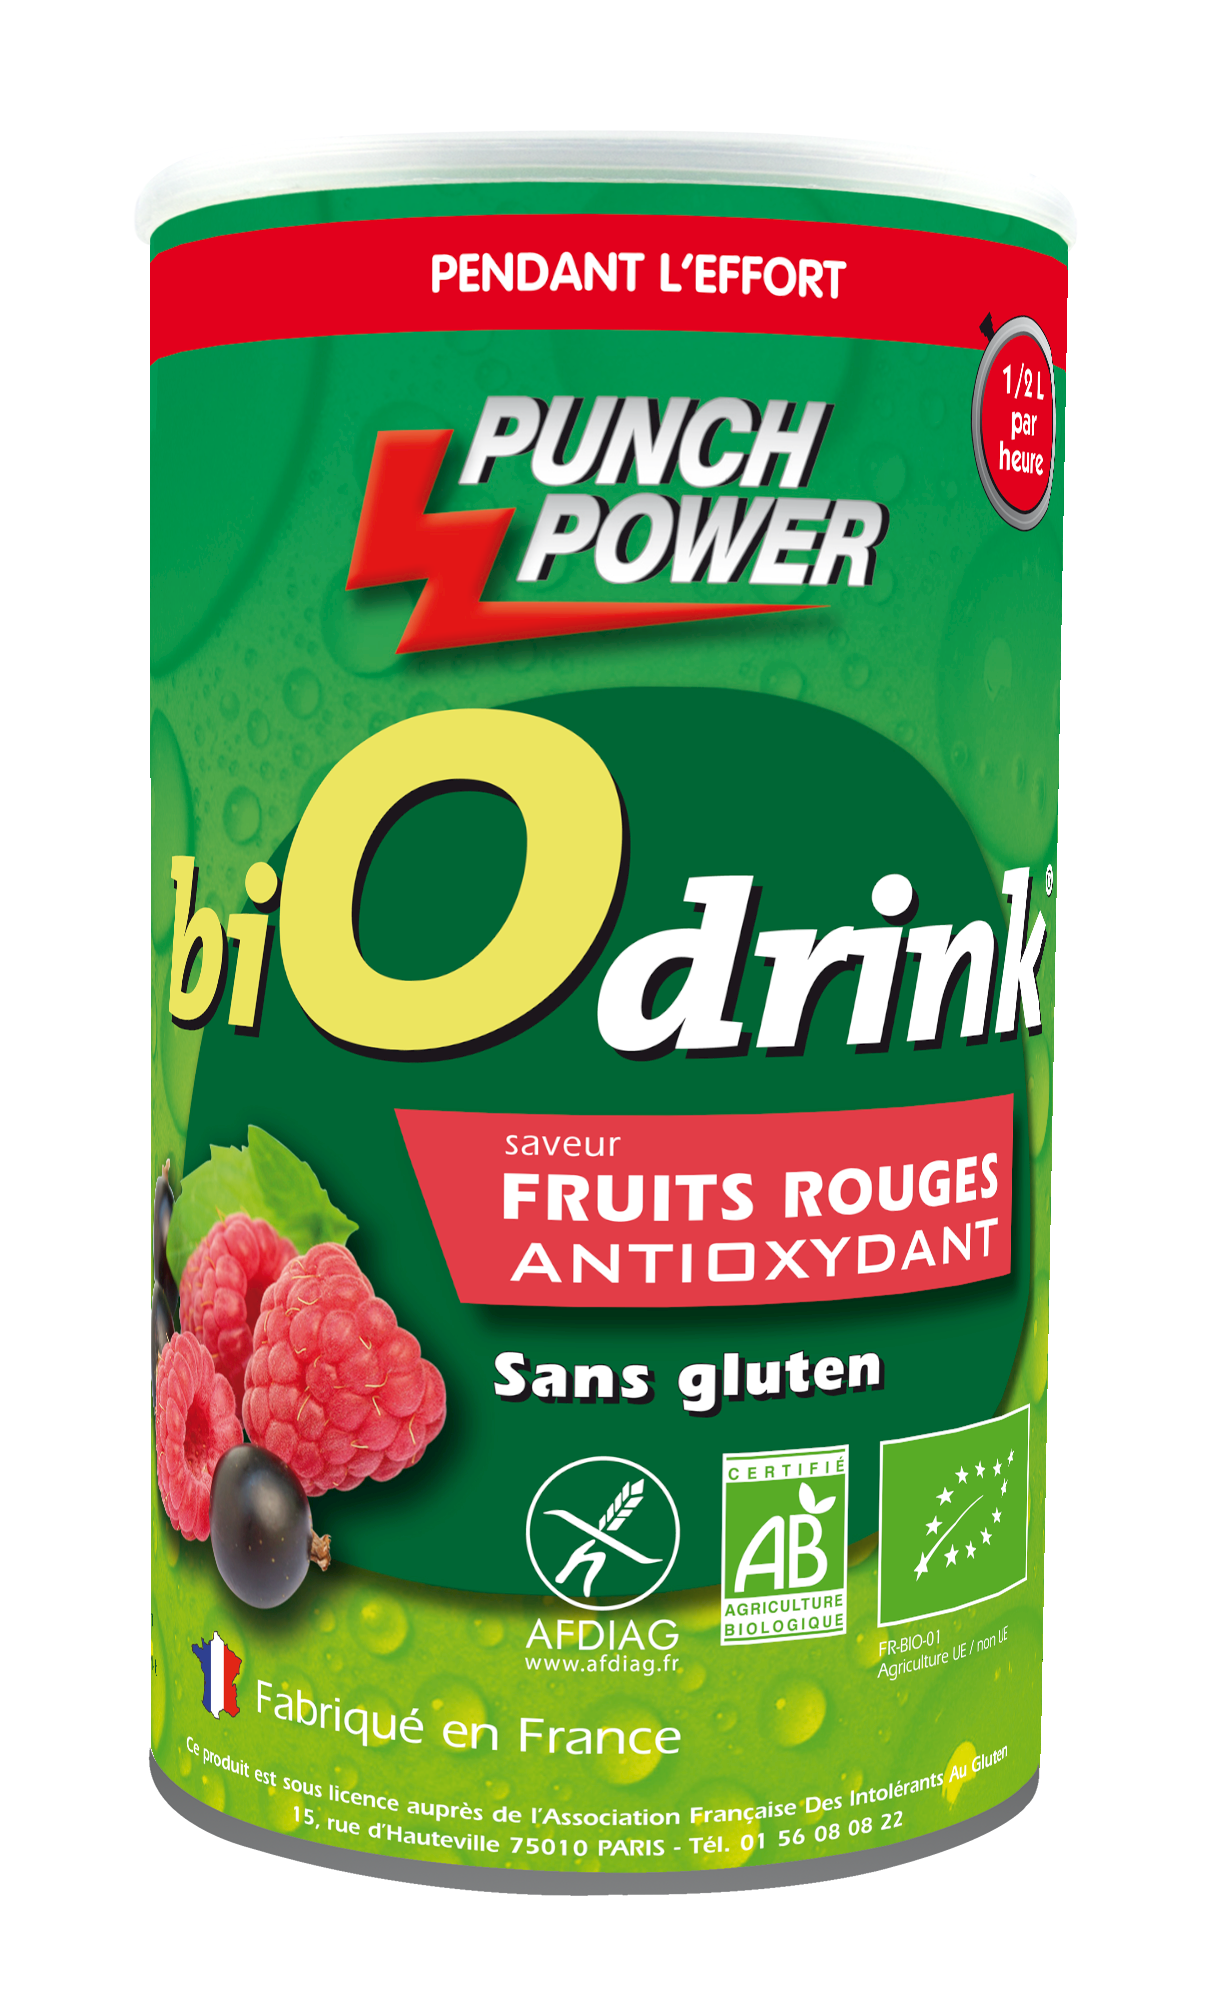 Punch Power BiOdrink Antioxydant Fruits rouges sans gluten - Energidrik